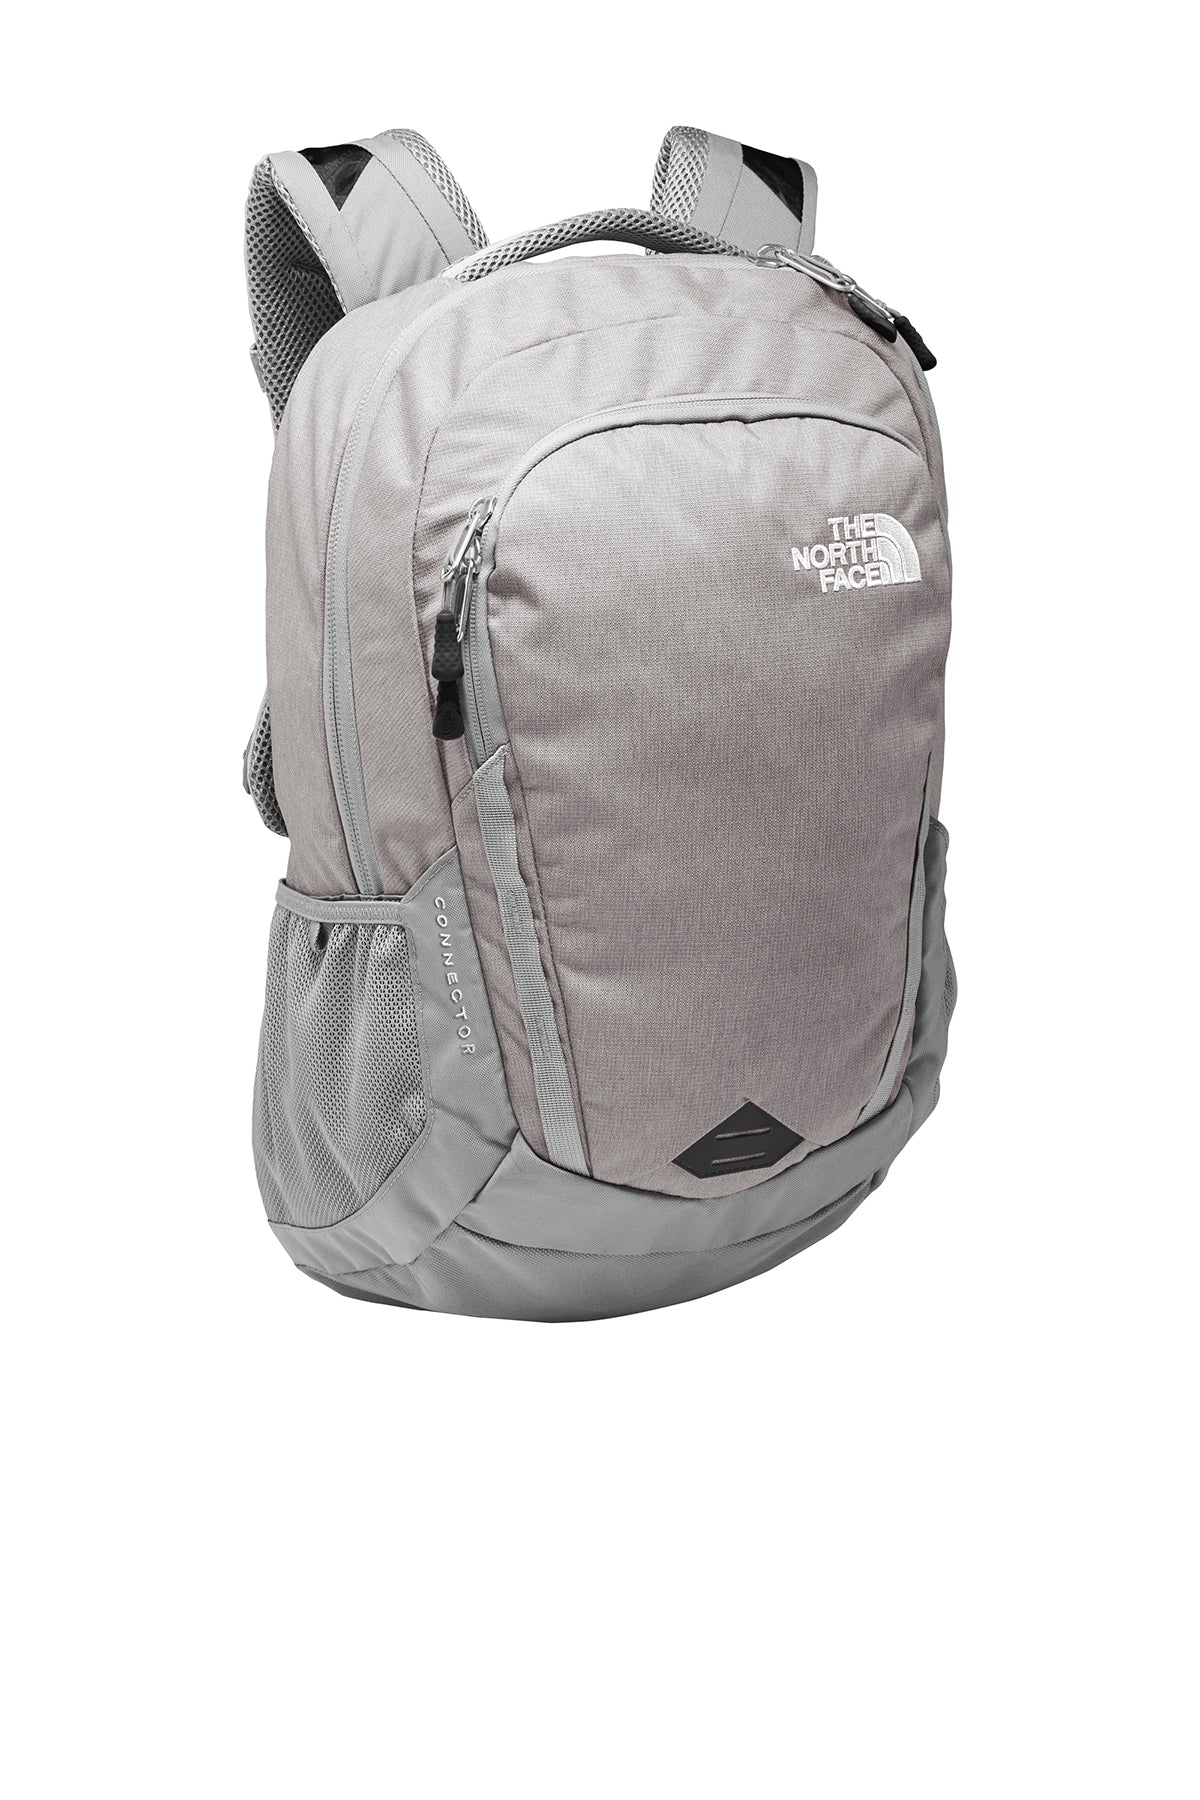 North Face Connector Backpack Mid Grey Dark Heather/ Mid Grey